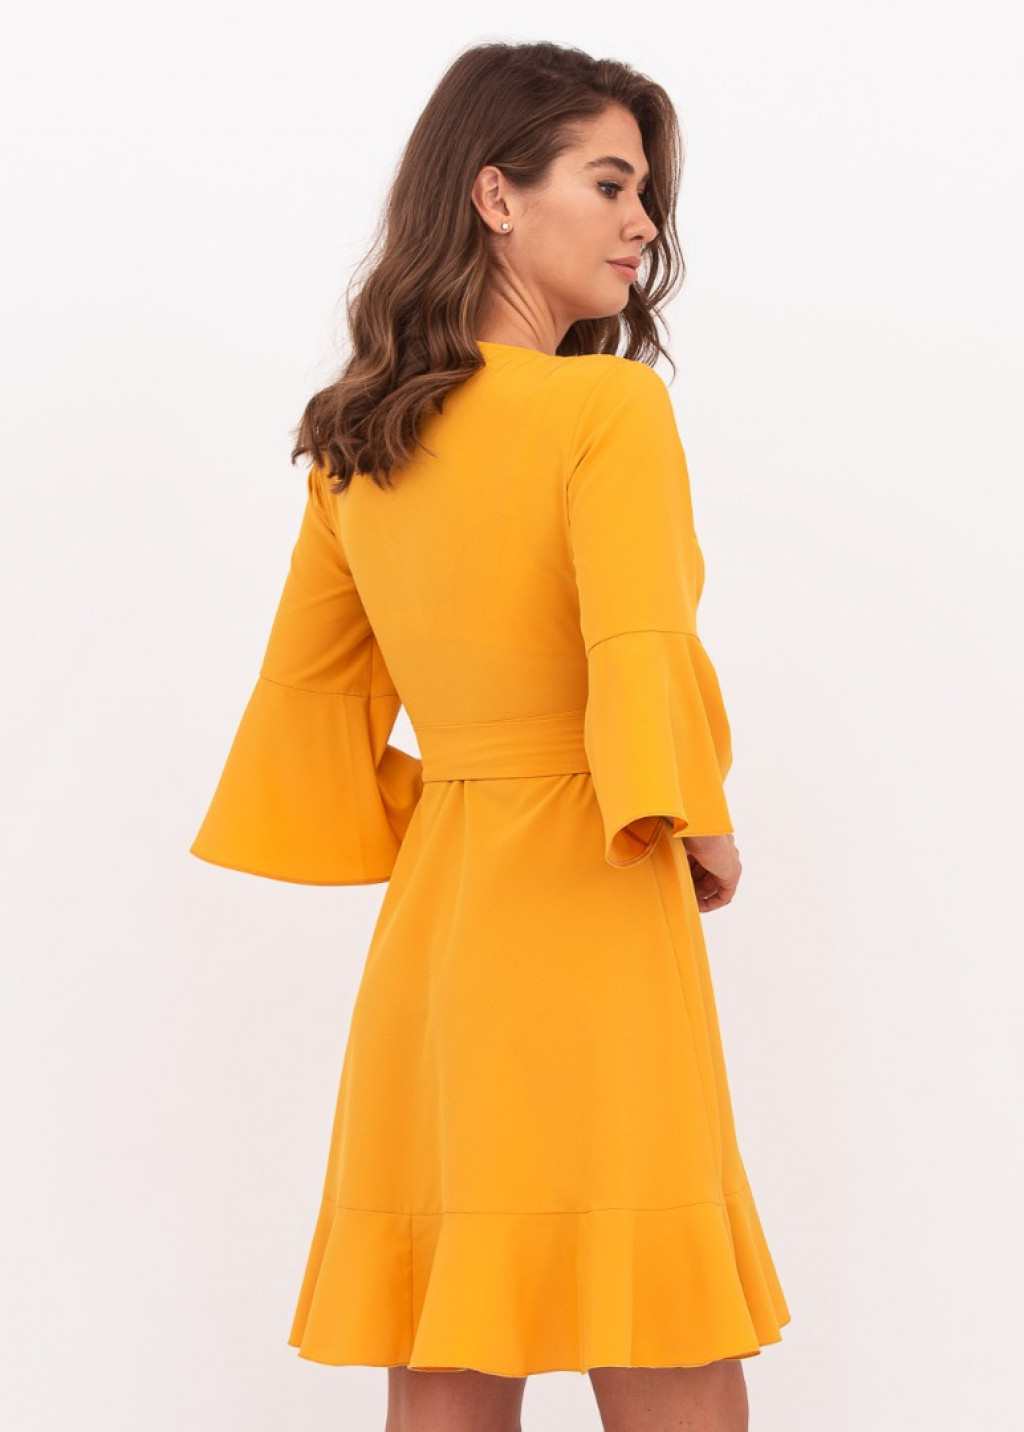 Honey yellow mini wrap dress